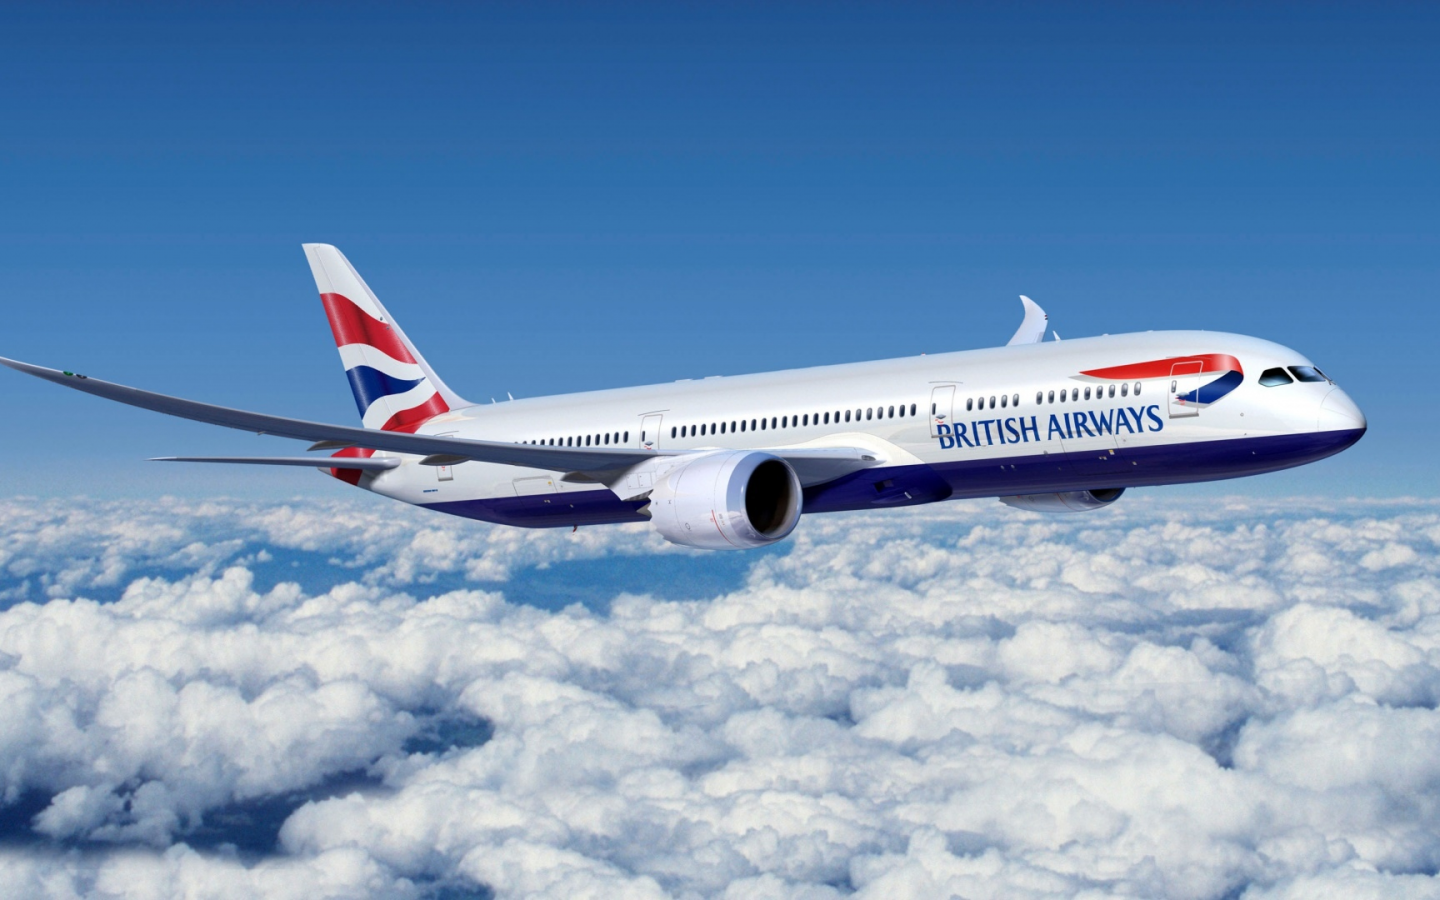 boeing, авиалайнер, 777, british airways, пассажирский, самолет, авиация, самолет, небо, облака